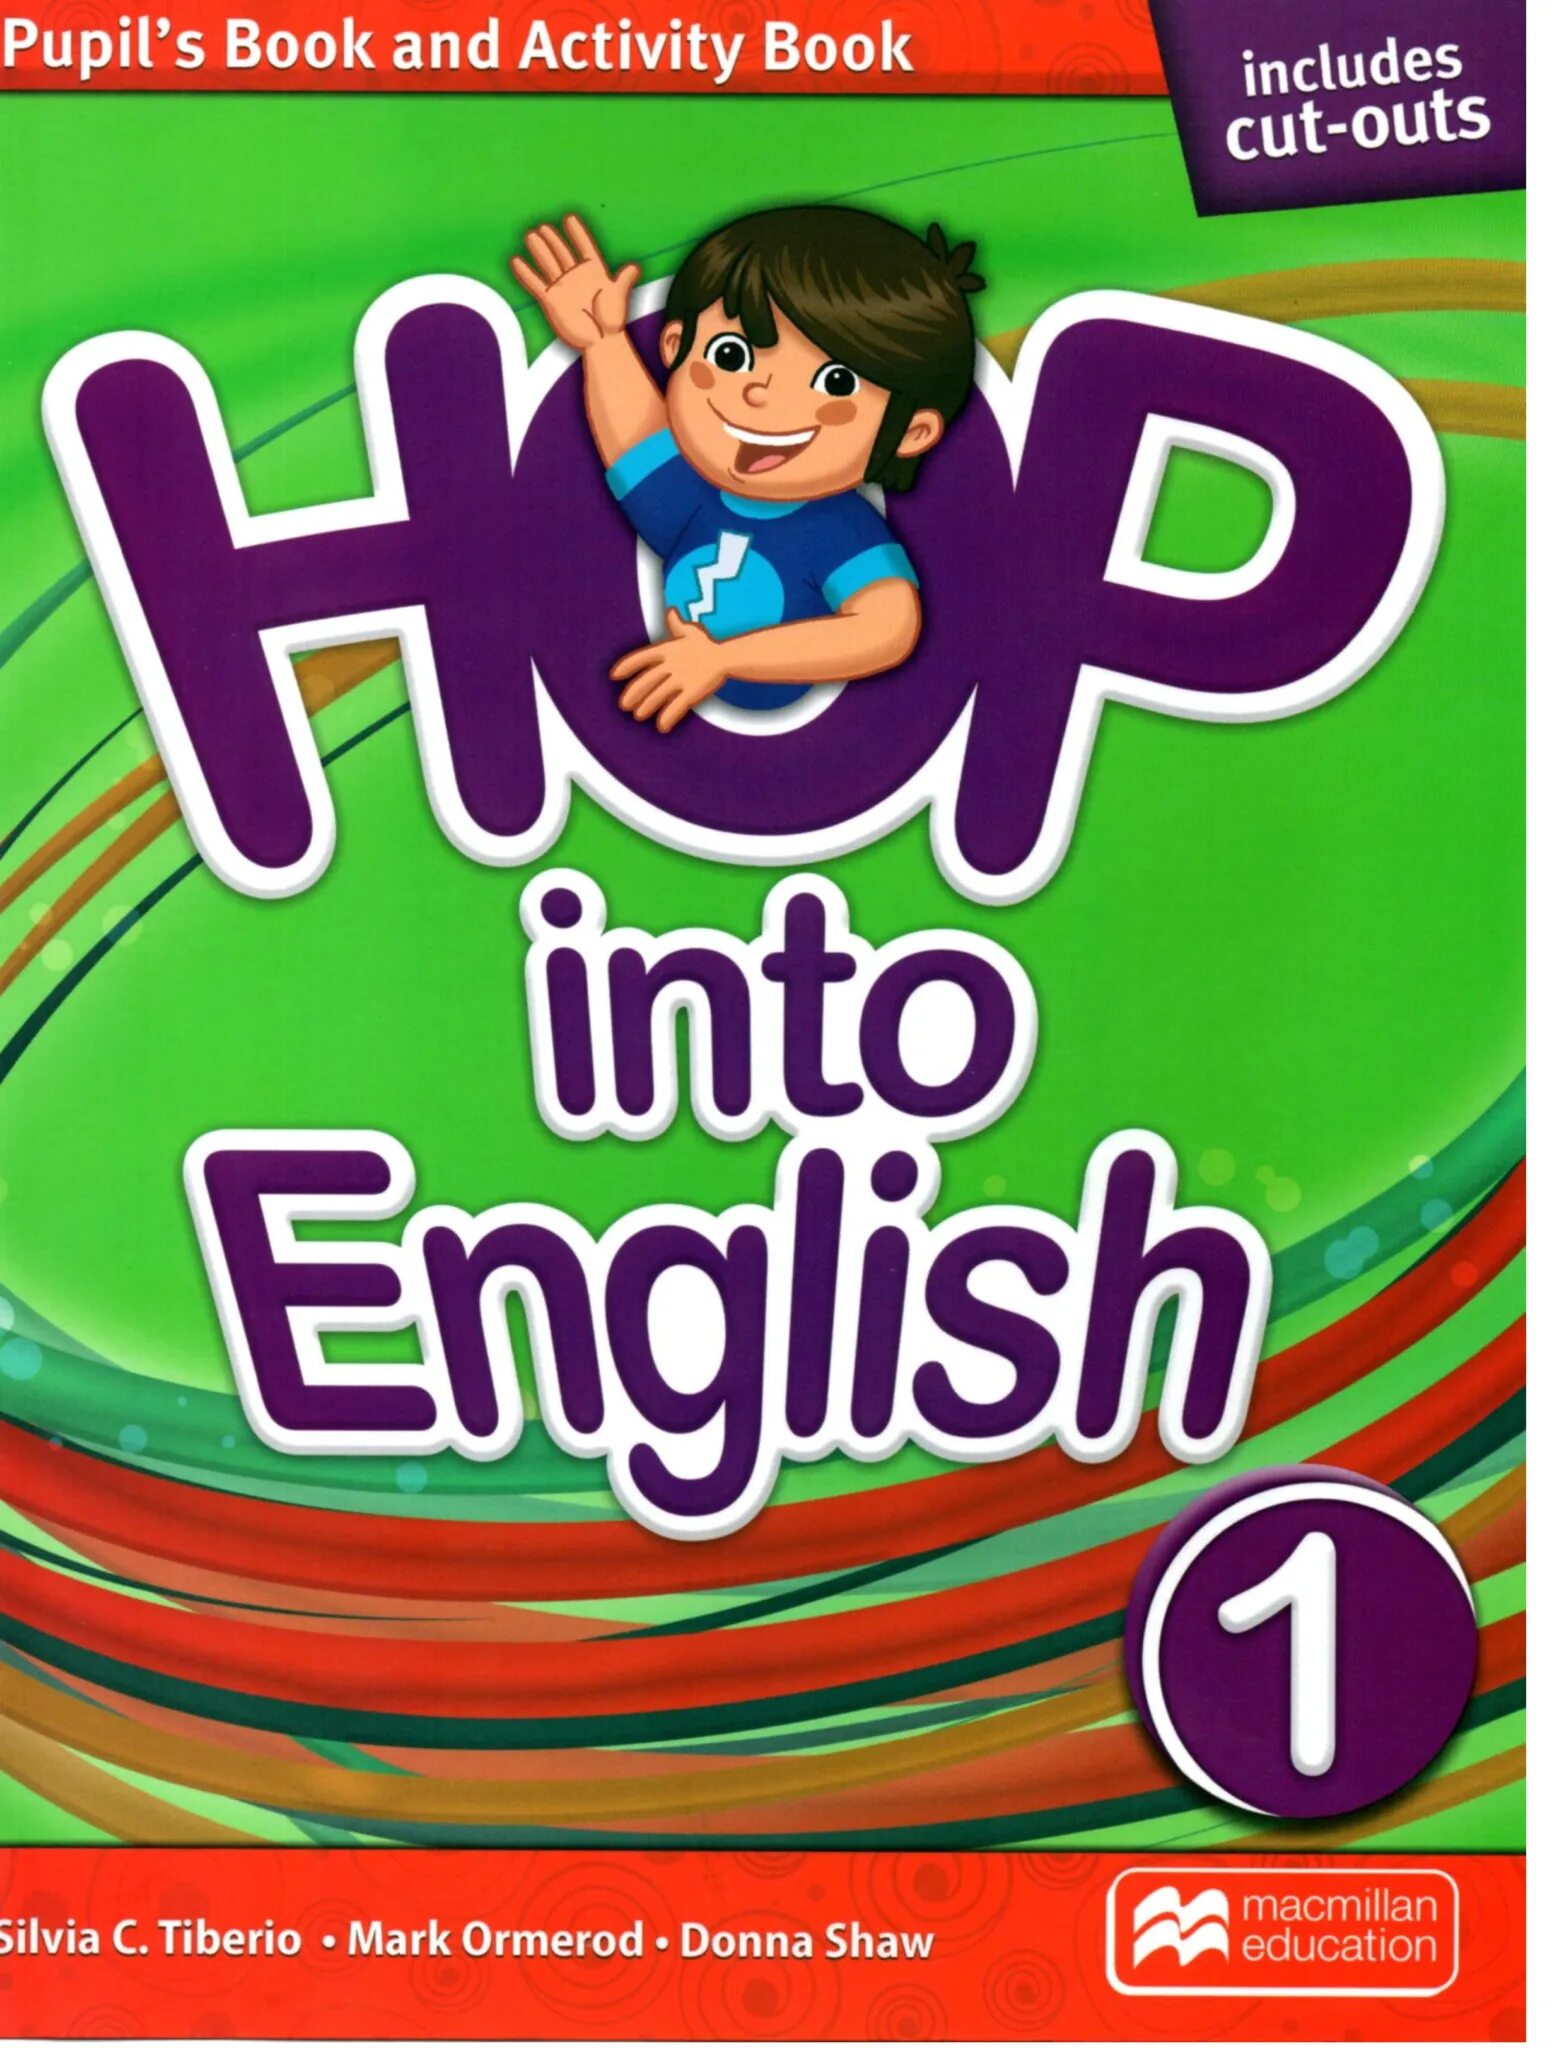 Английский дети Macmillan. English activity book. English pupil's Никитенко. Pupils book activity book.